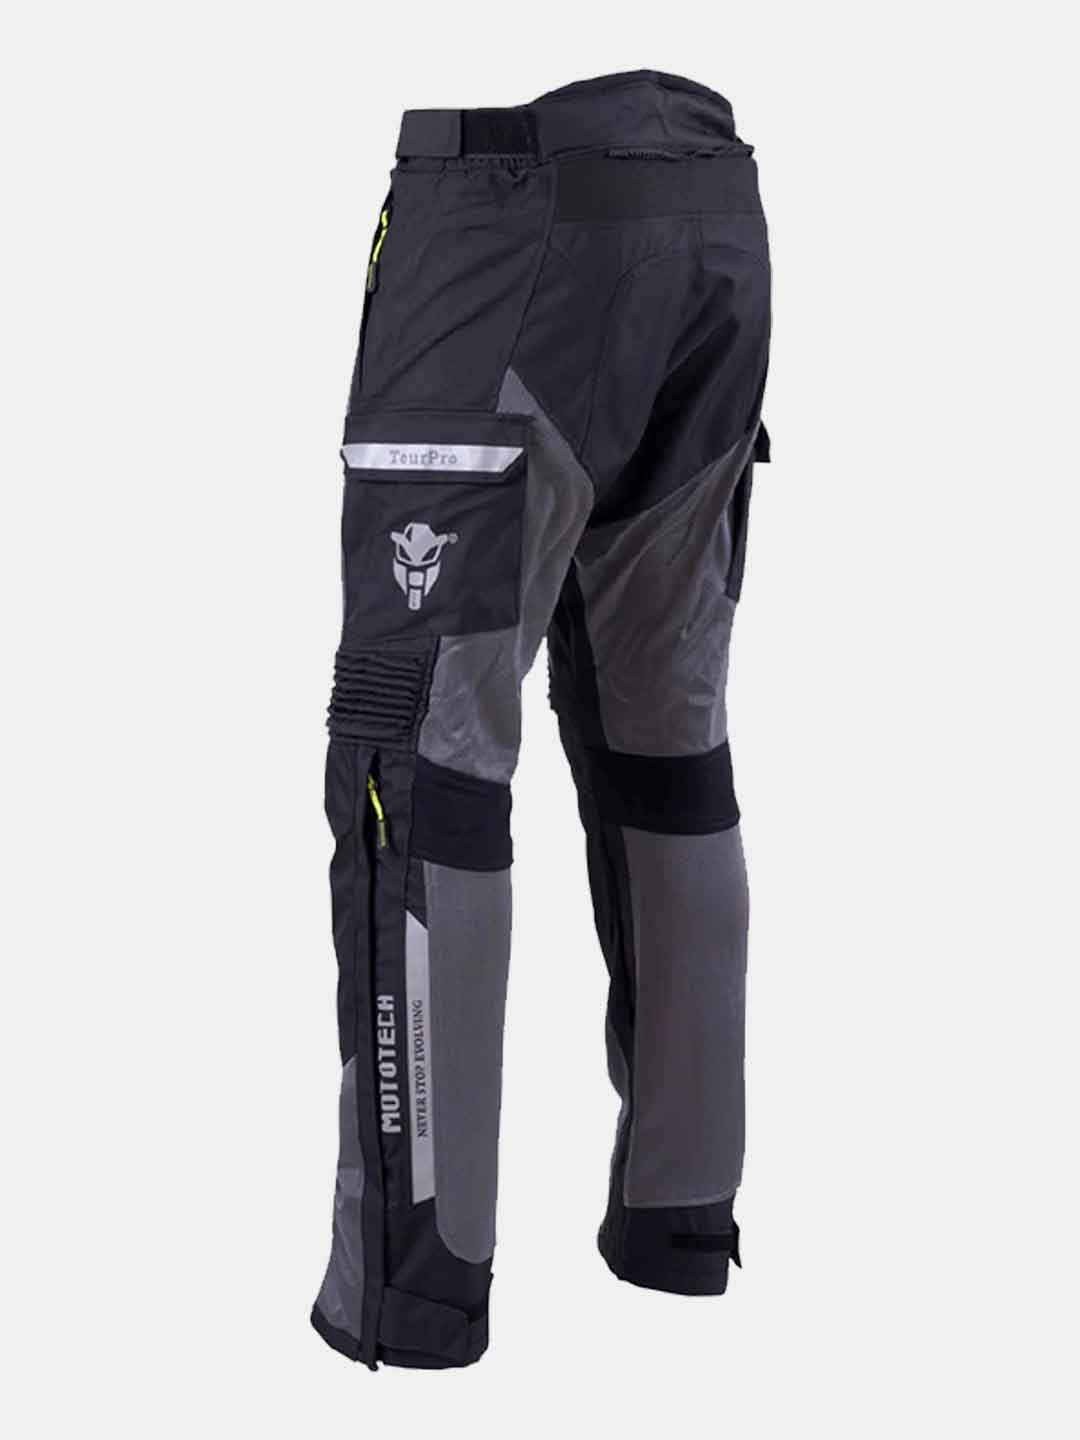 ScentLok Camo Hunting Pants for Men - Savanna Aero Crosshair Lightweight  Gear (Mossy Oak Terra Outland, Small) - Walmart.com